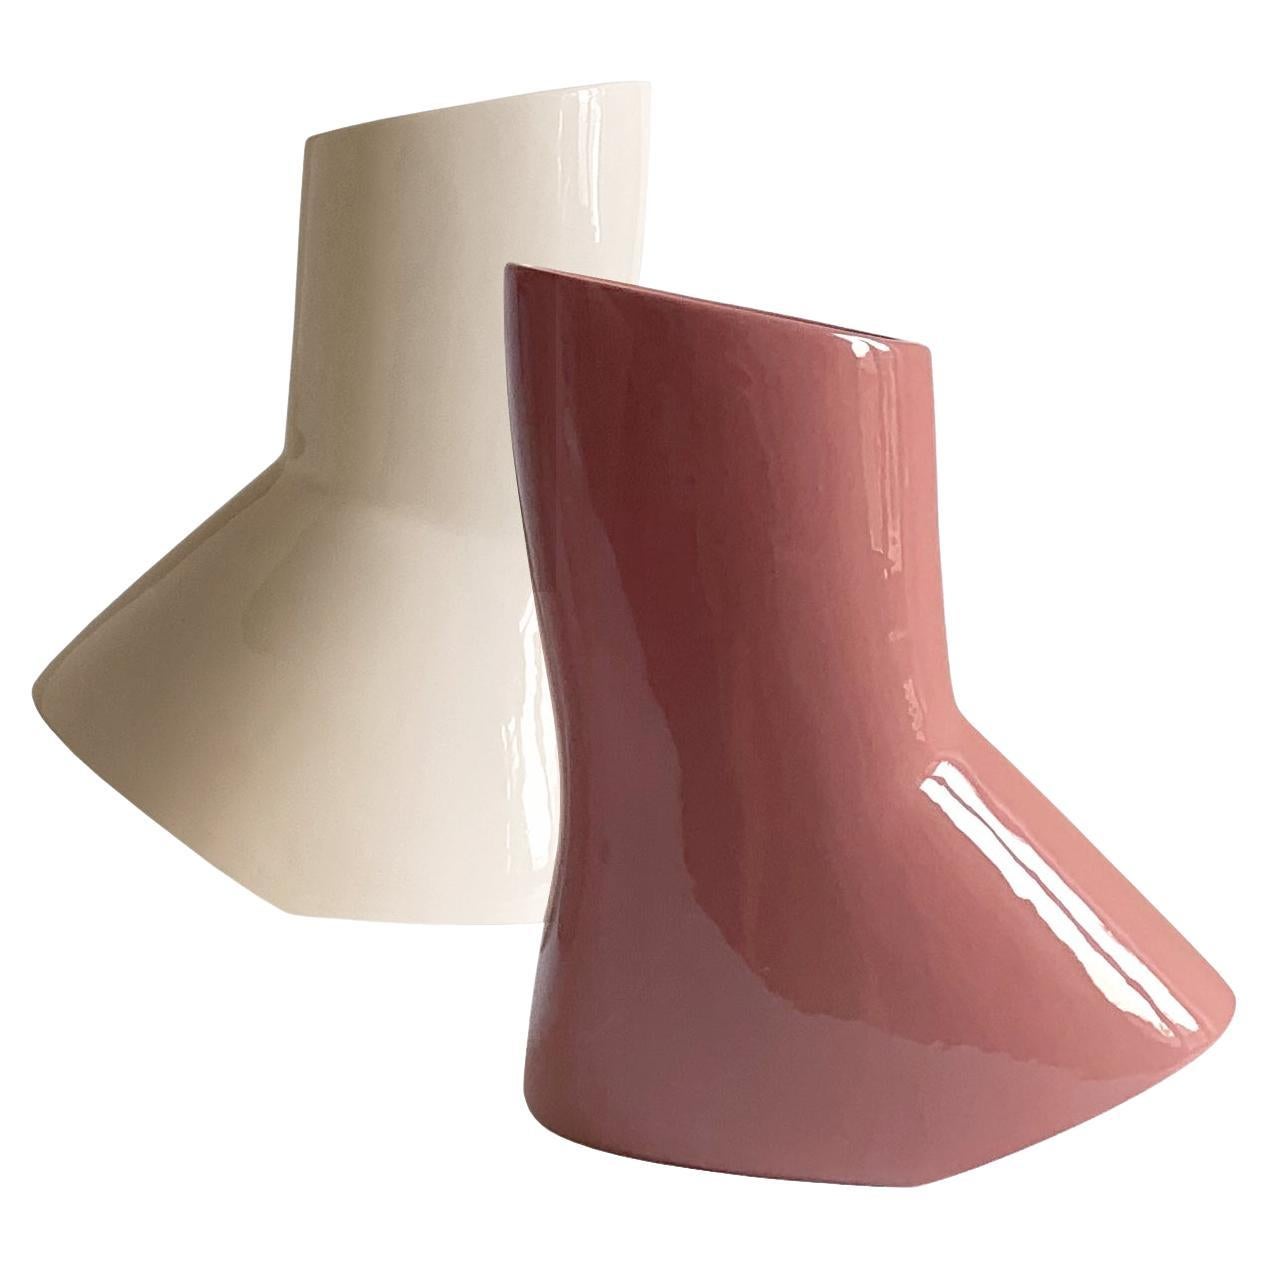 Set of 2 Menadi Ceramic Vases by Studio Zero